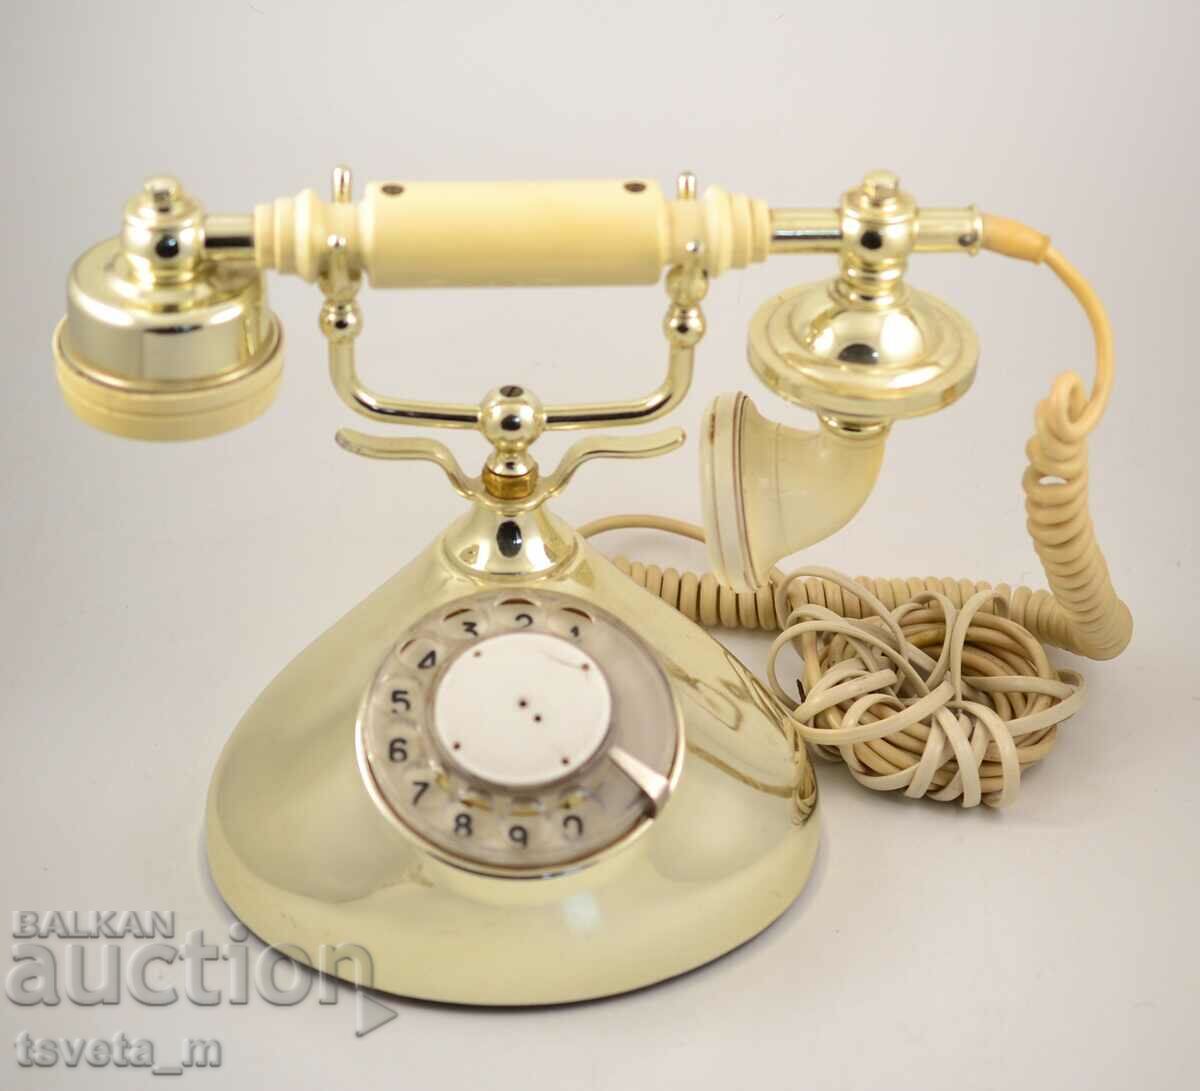 Phone set USSR, social